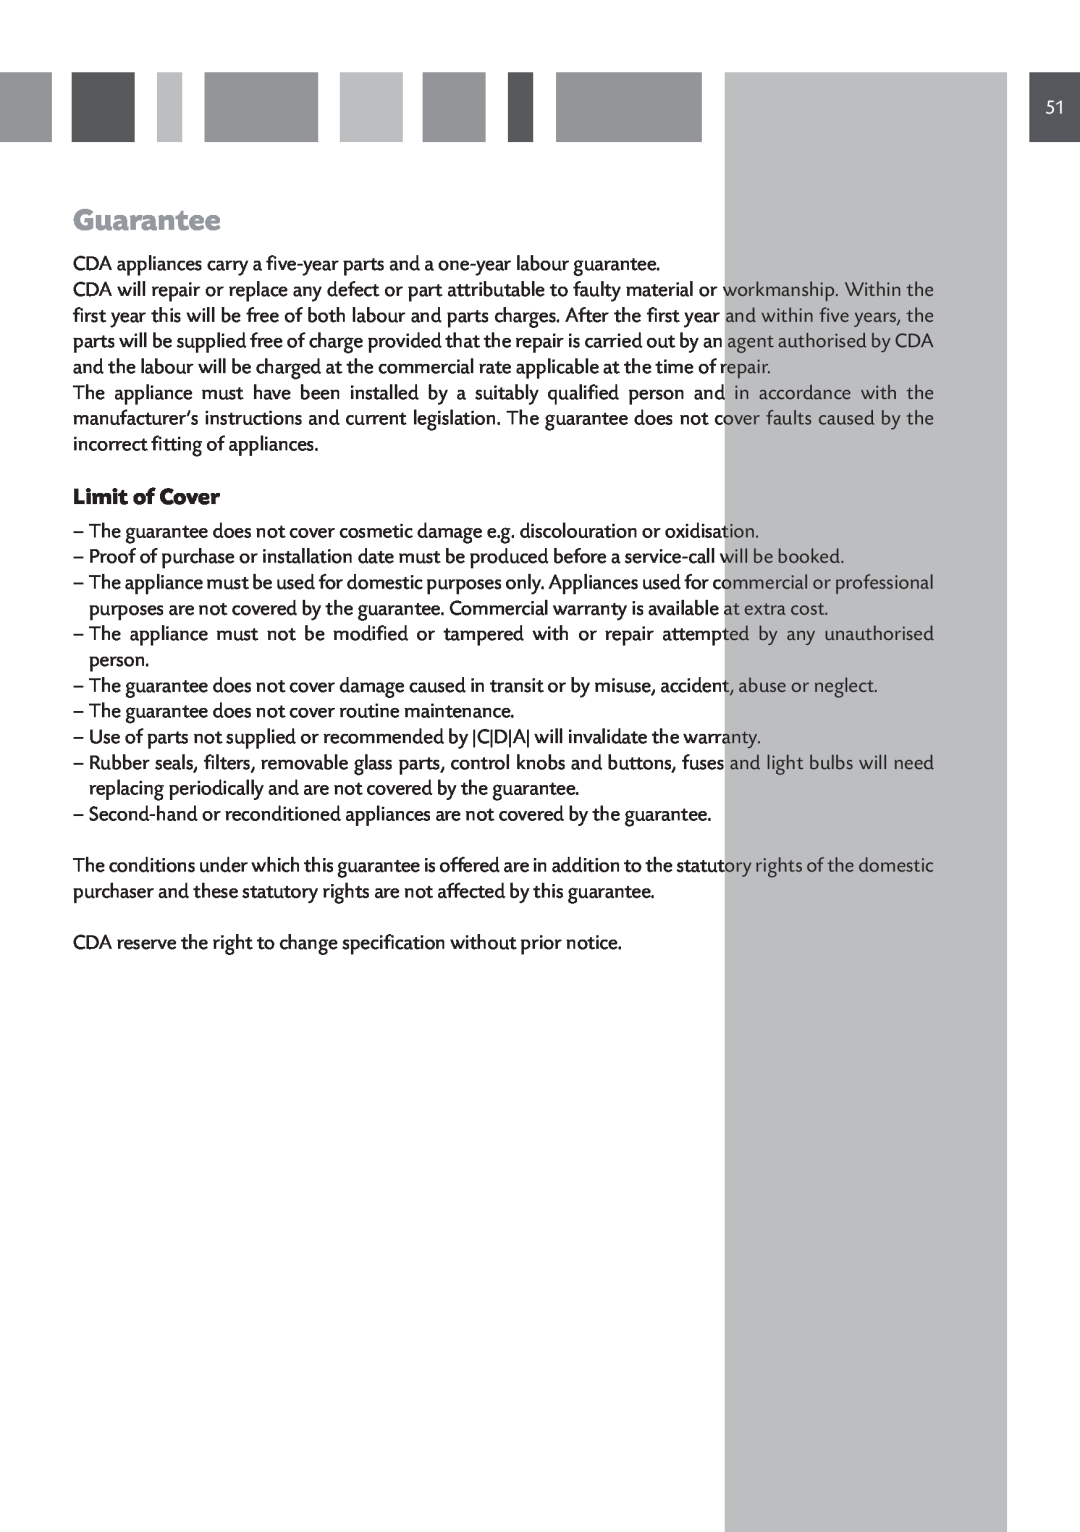 CDA 11Z6 manual Guarantee, Limit of Cover 